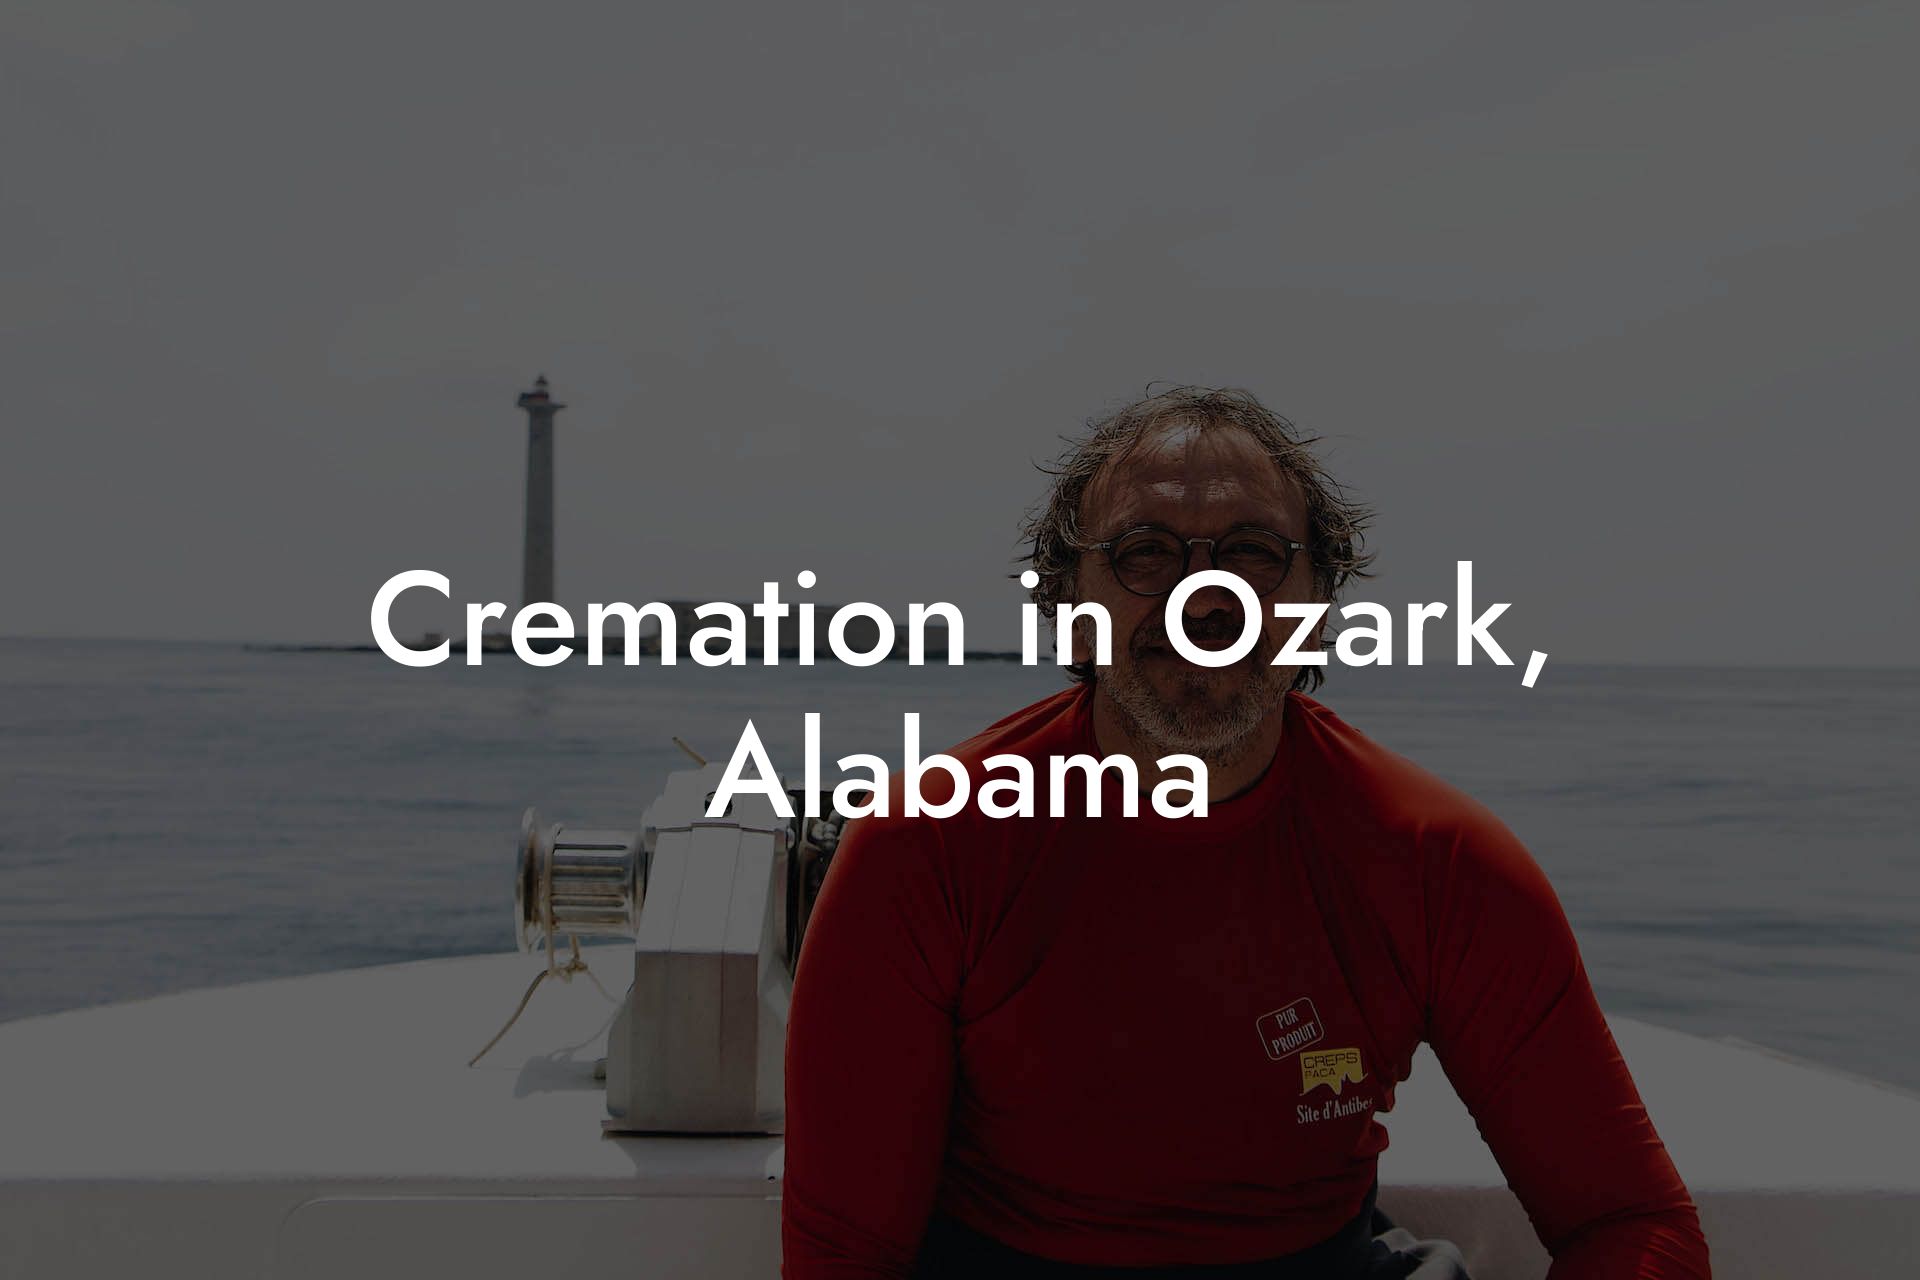 Cremation in Ozark, Alabama